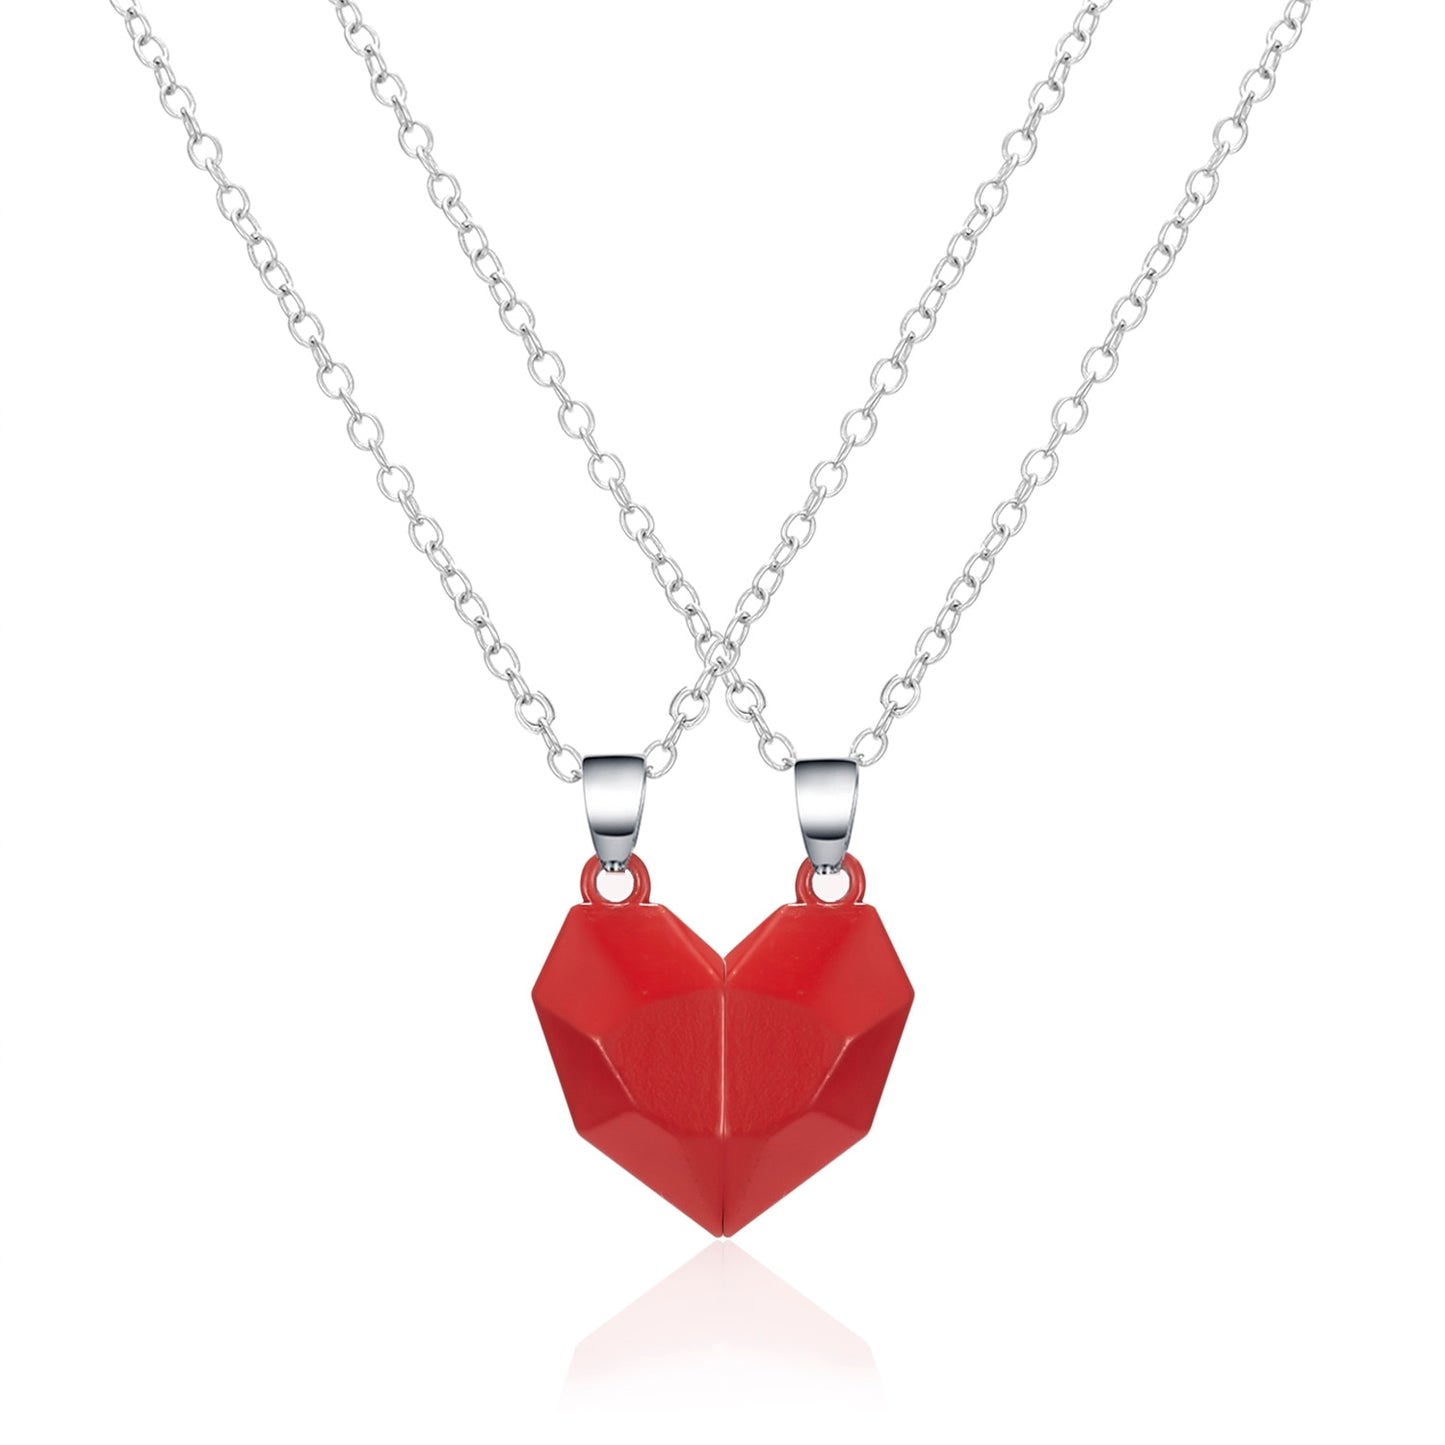 2Pcs/Lot Magnetic Couple Necklace Friendship Heart Pendant Distance Faceted Charm Necklace Women Valentine's Day Gift 2021